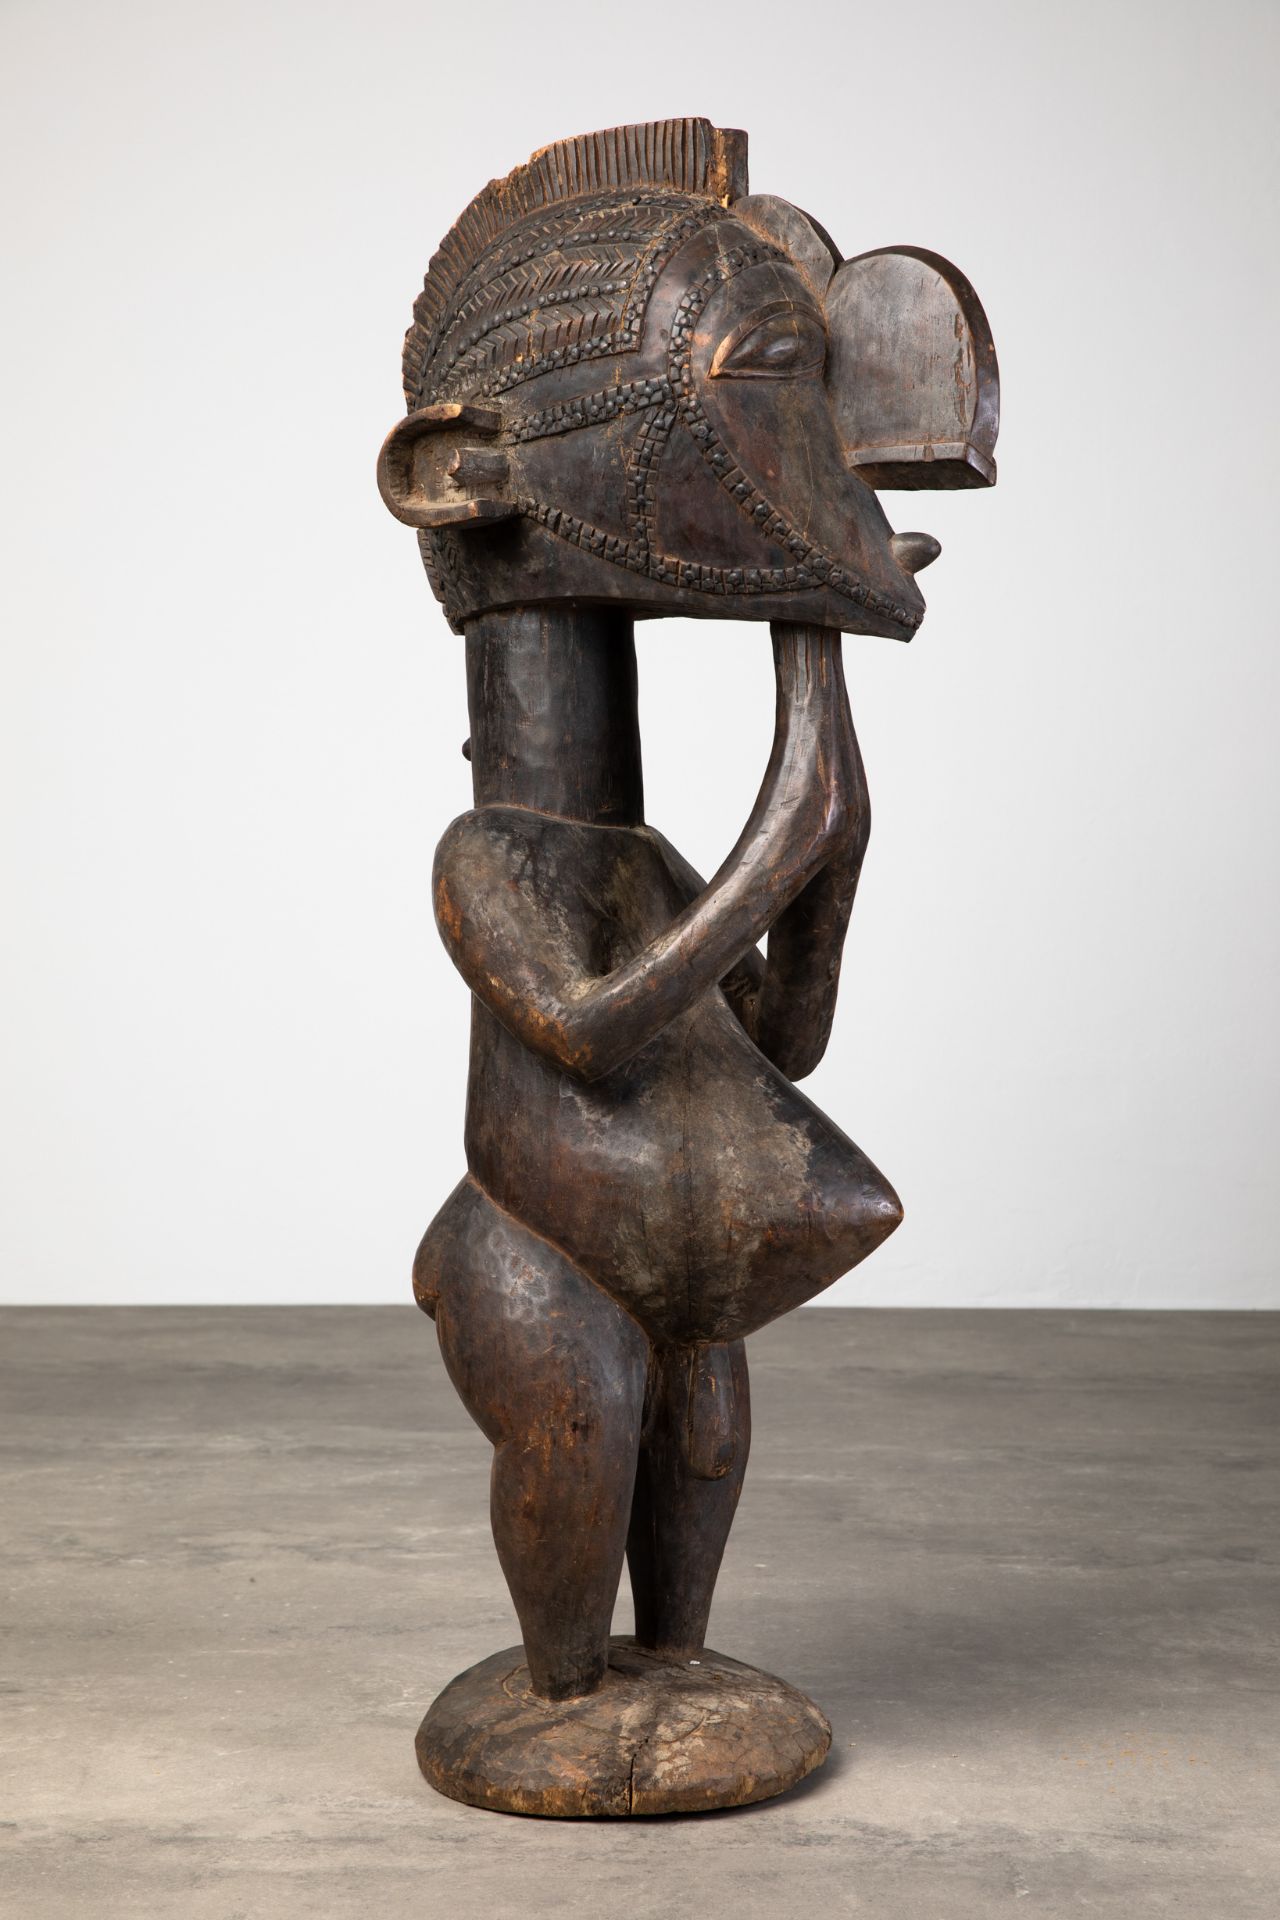 Large Baga sculpture, Guinea